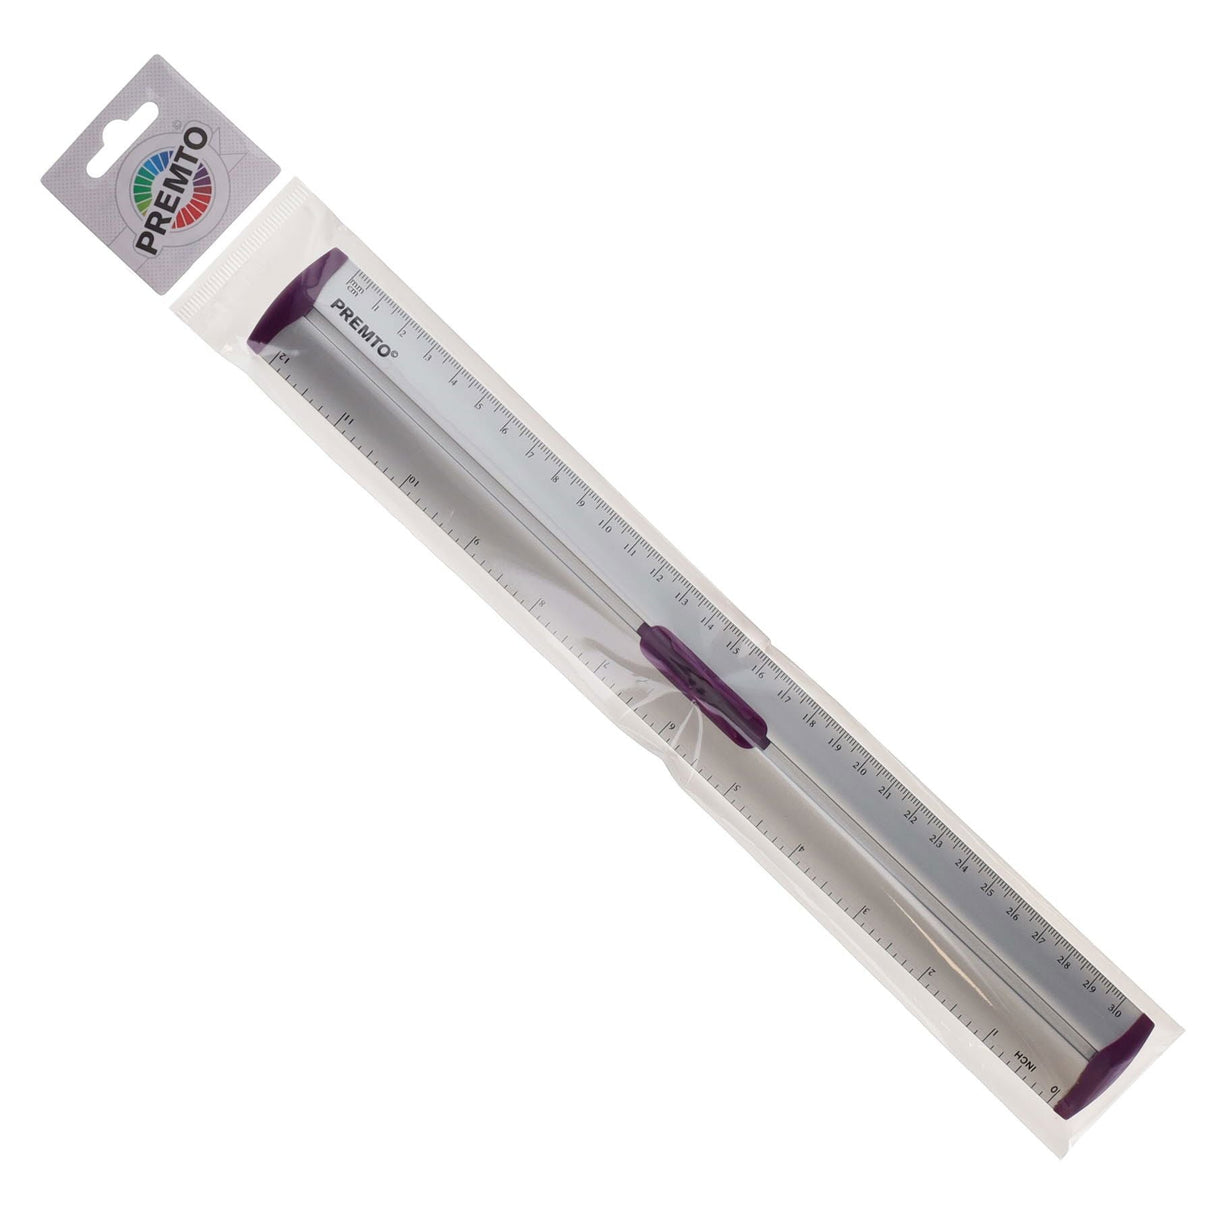 Premto S1 Aluminum Ruler With Grip 30cm - Grape Juice-Rulers-Premto|StationeryShop.co.uk